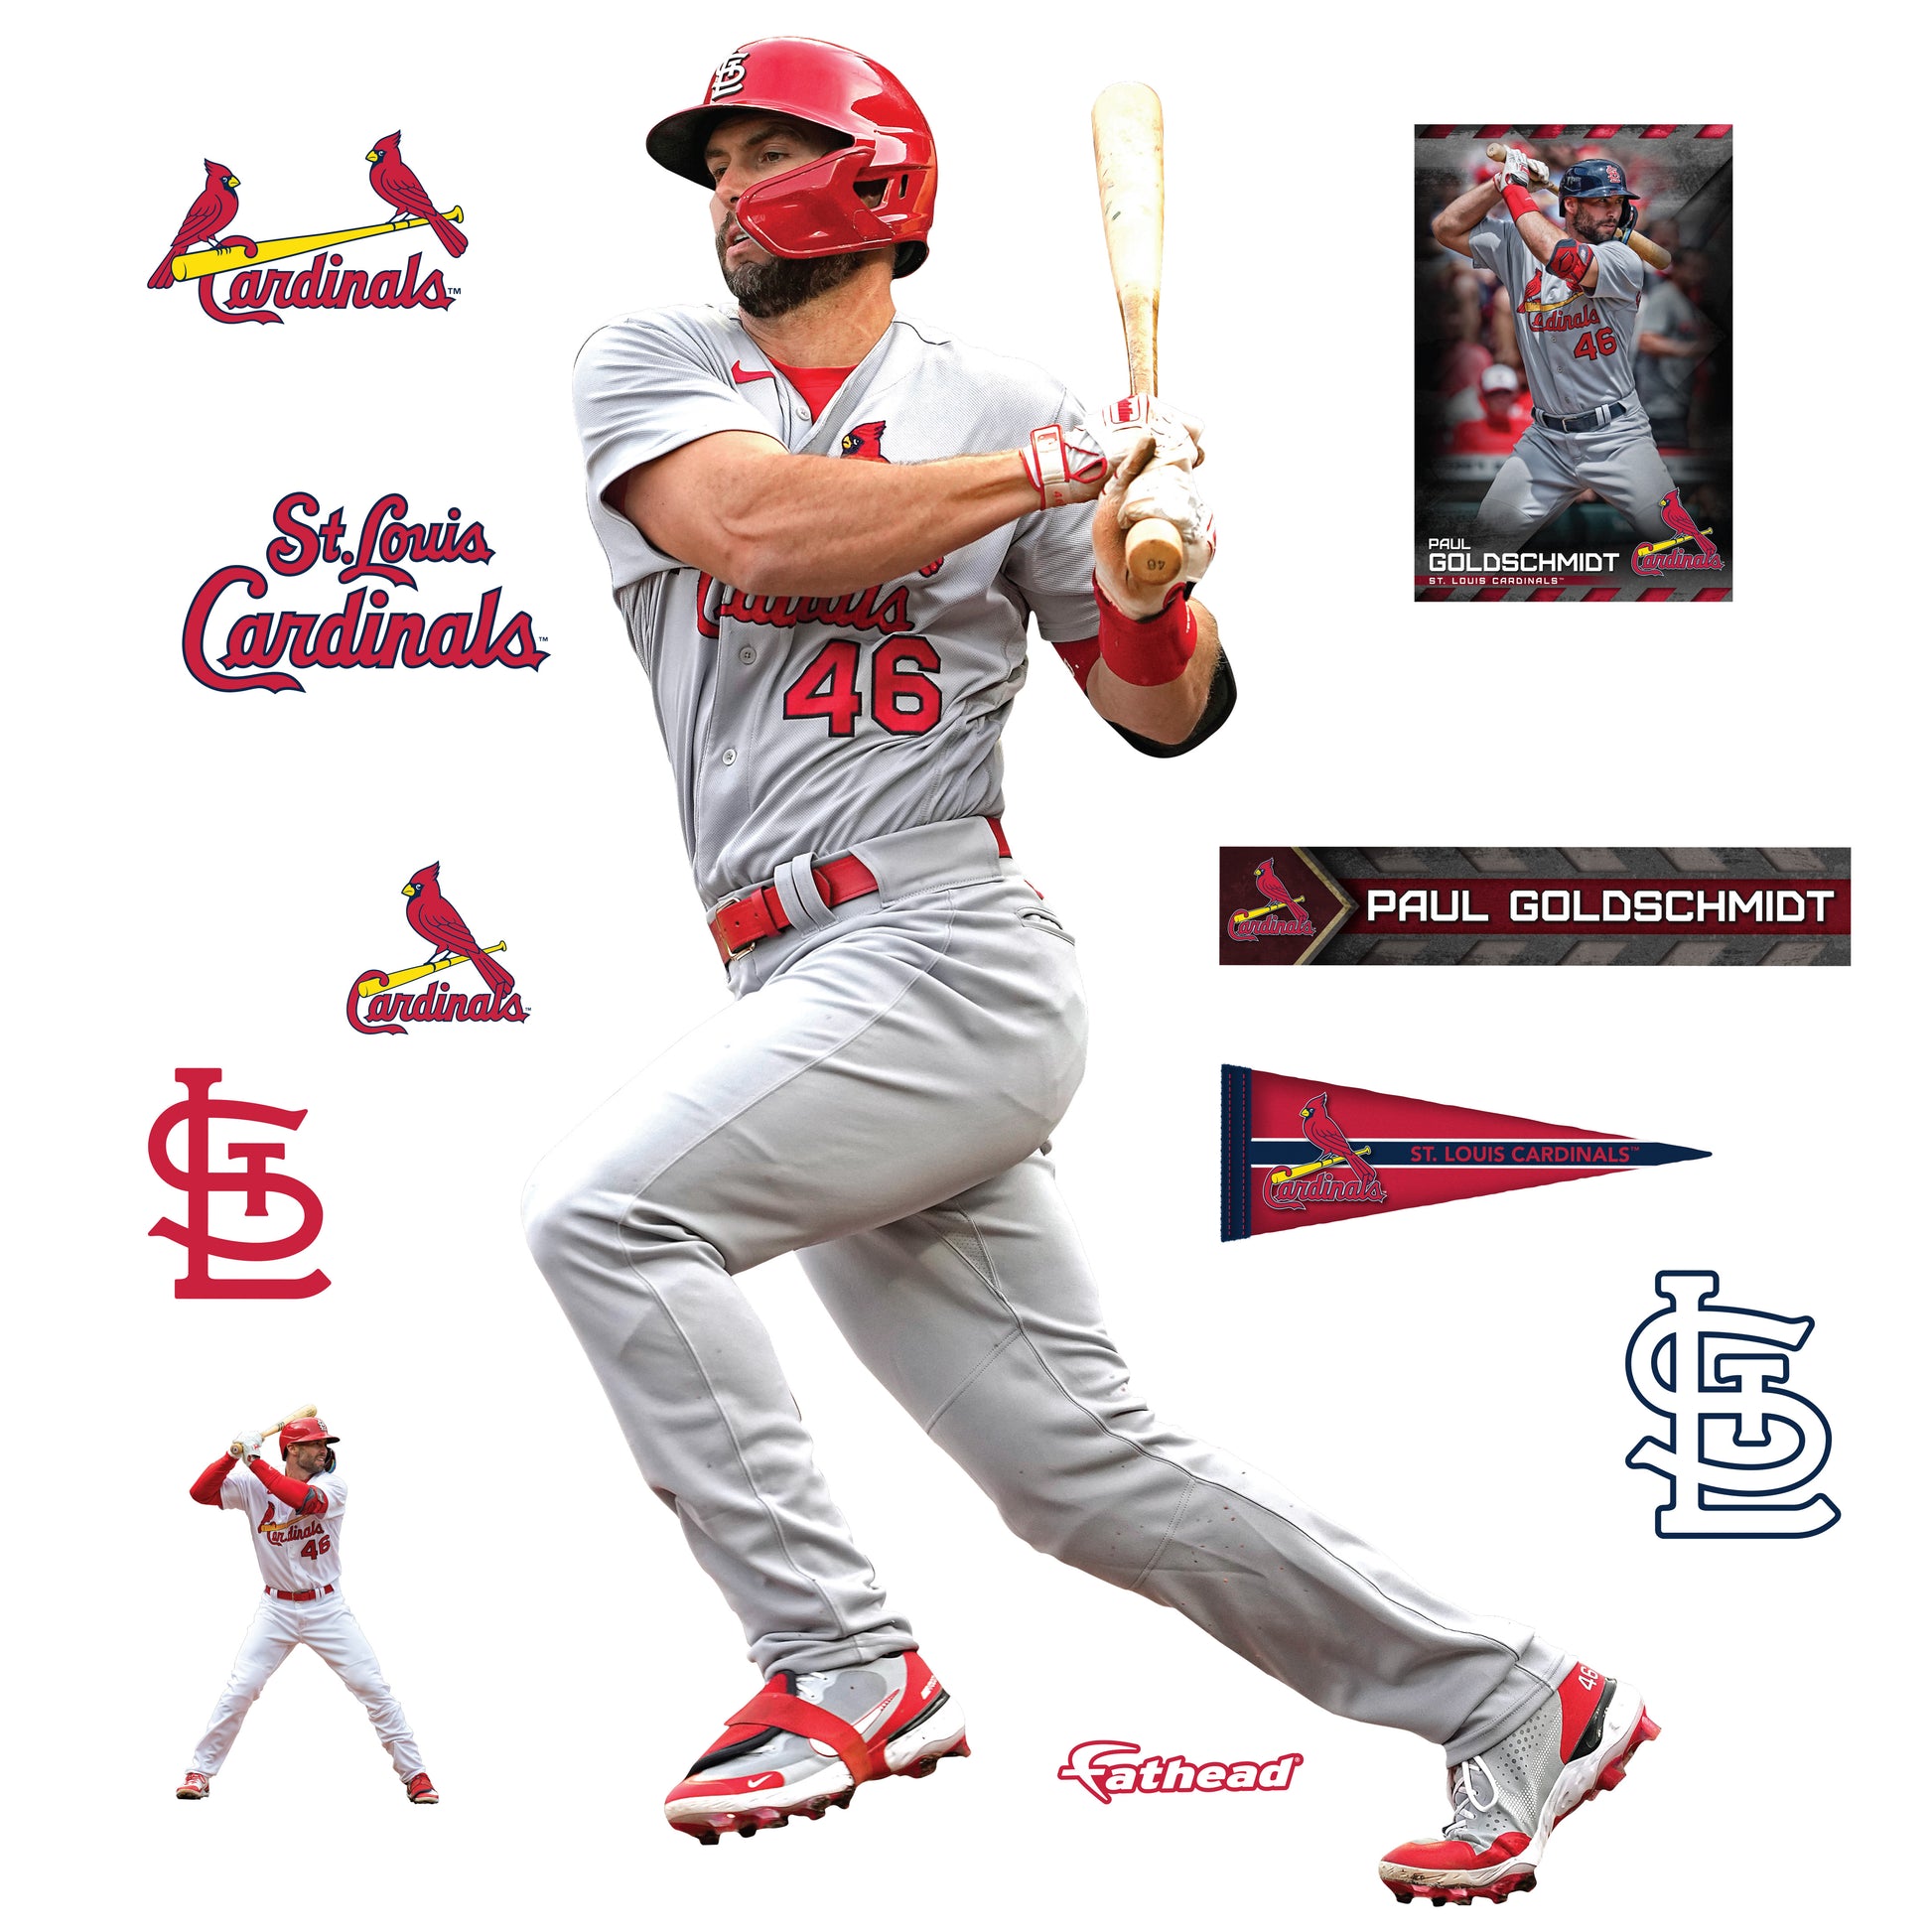 St. Louis Cardinals: Paul Goldschmidt 2022 - Officially Licensed